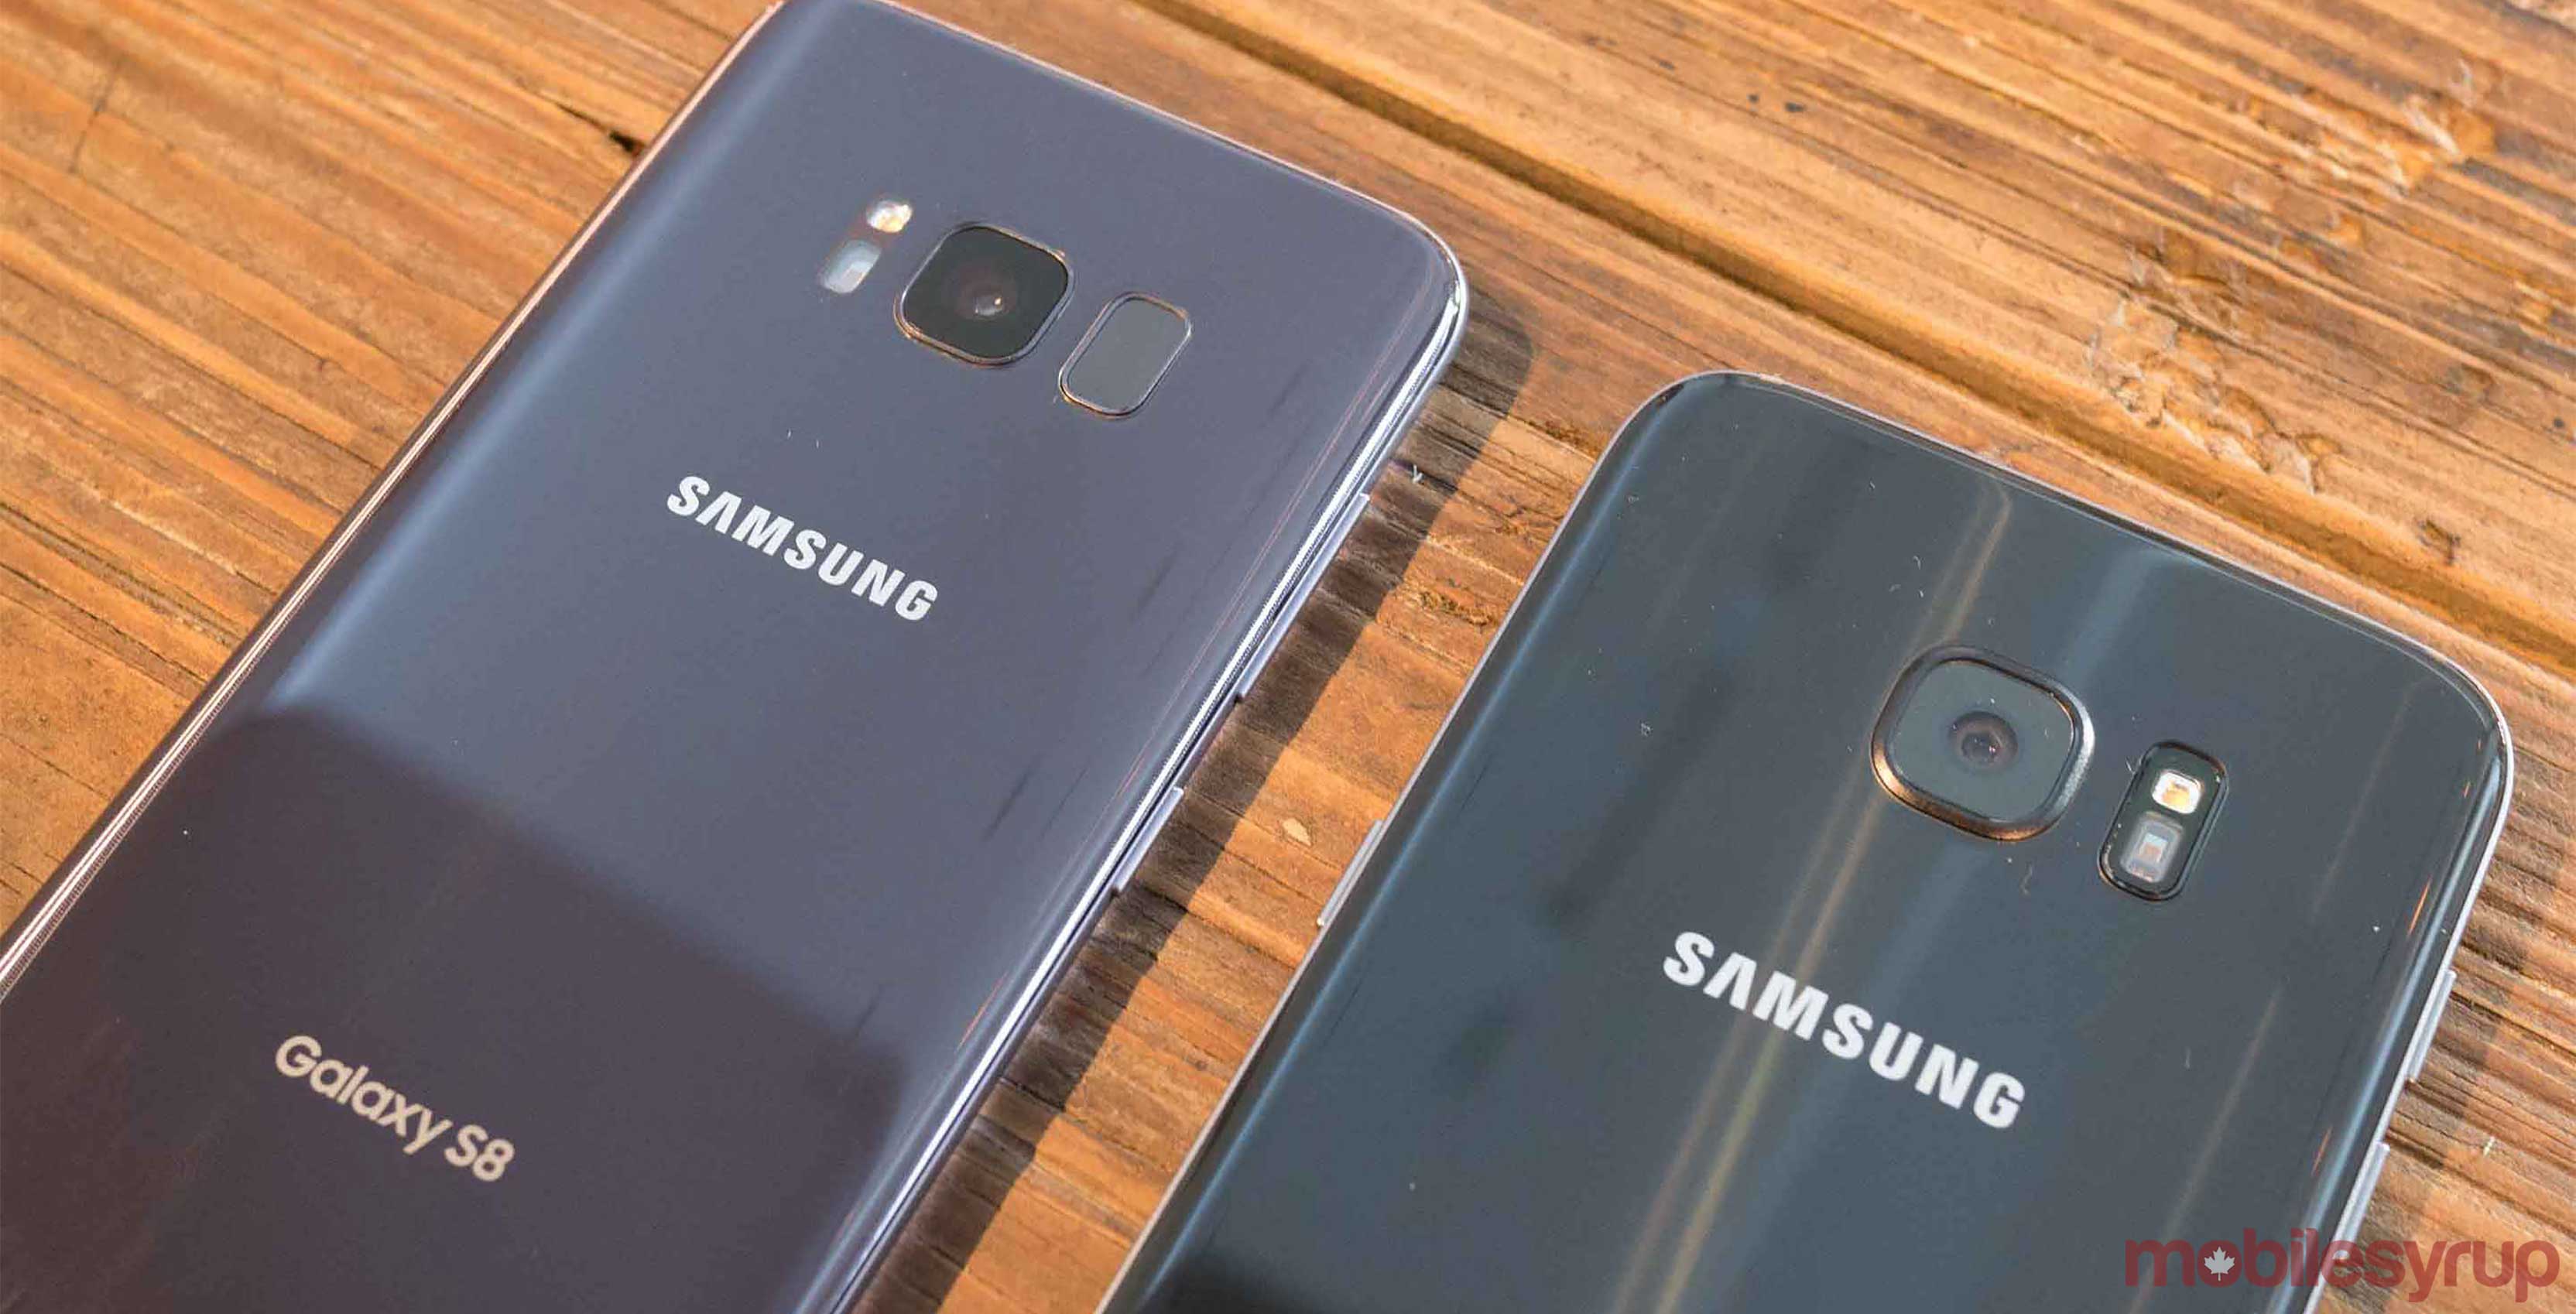 Comparison of Galaxy S8 vs Galaxy S7 smartphones